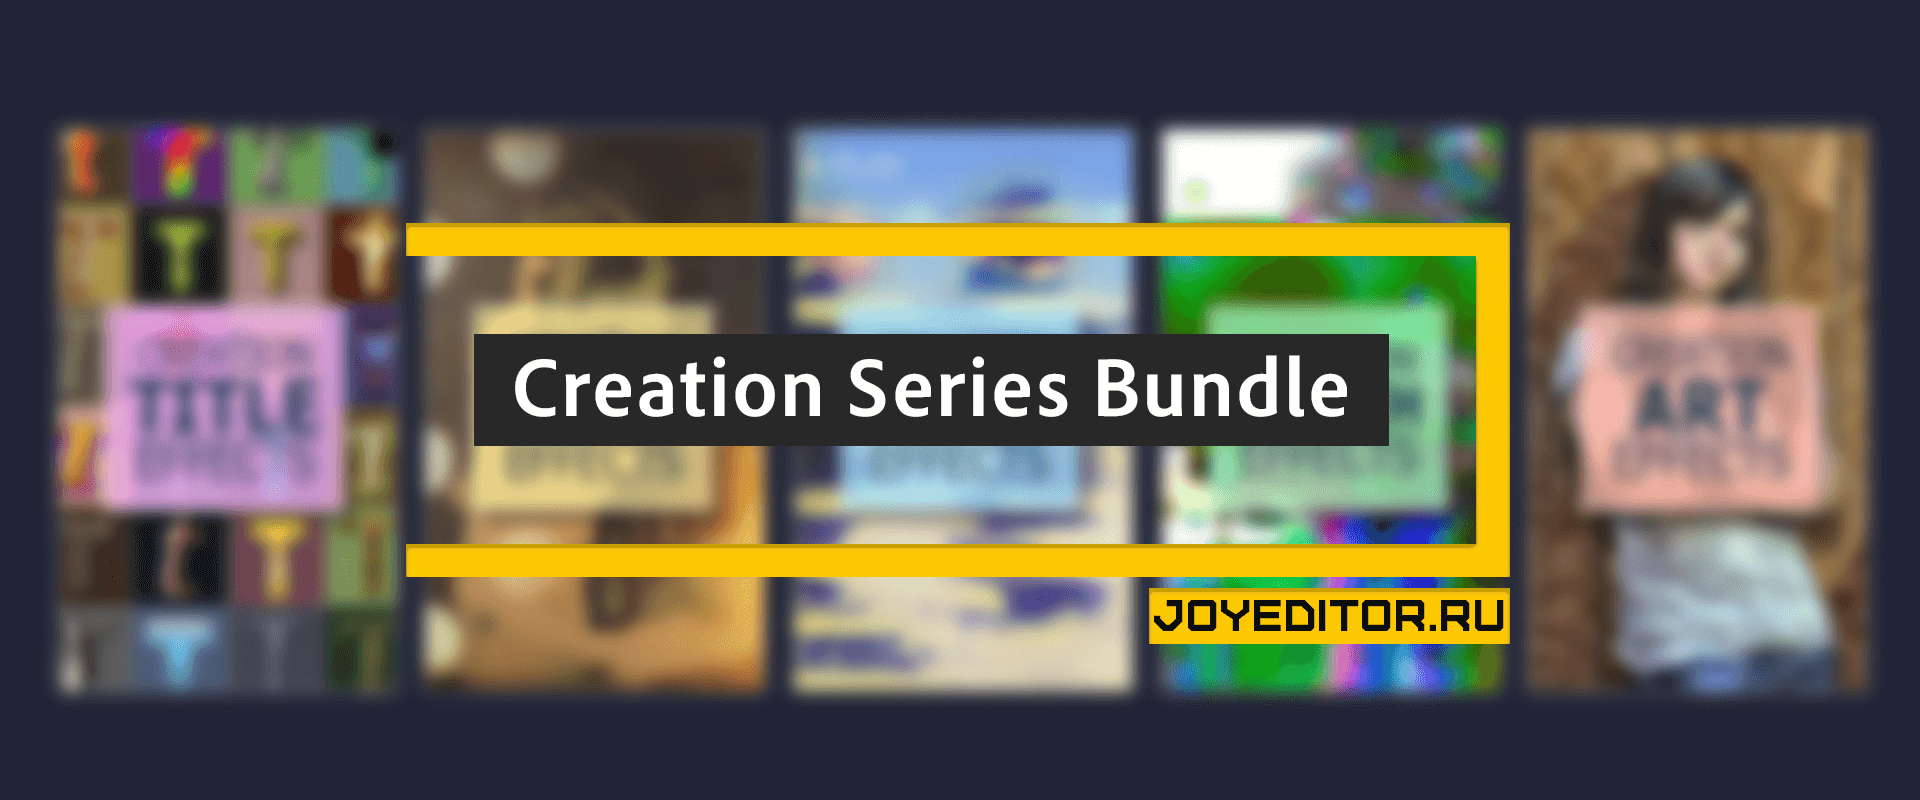 Creation Series Bundle